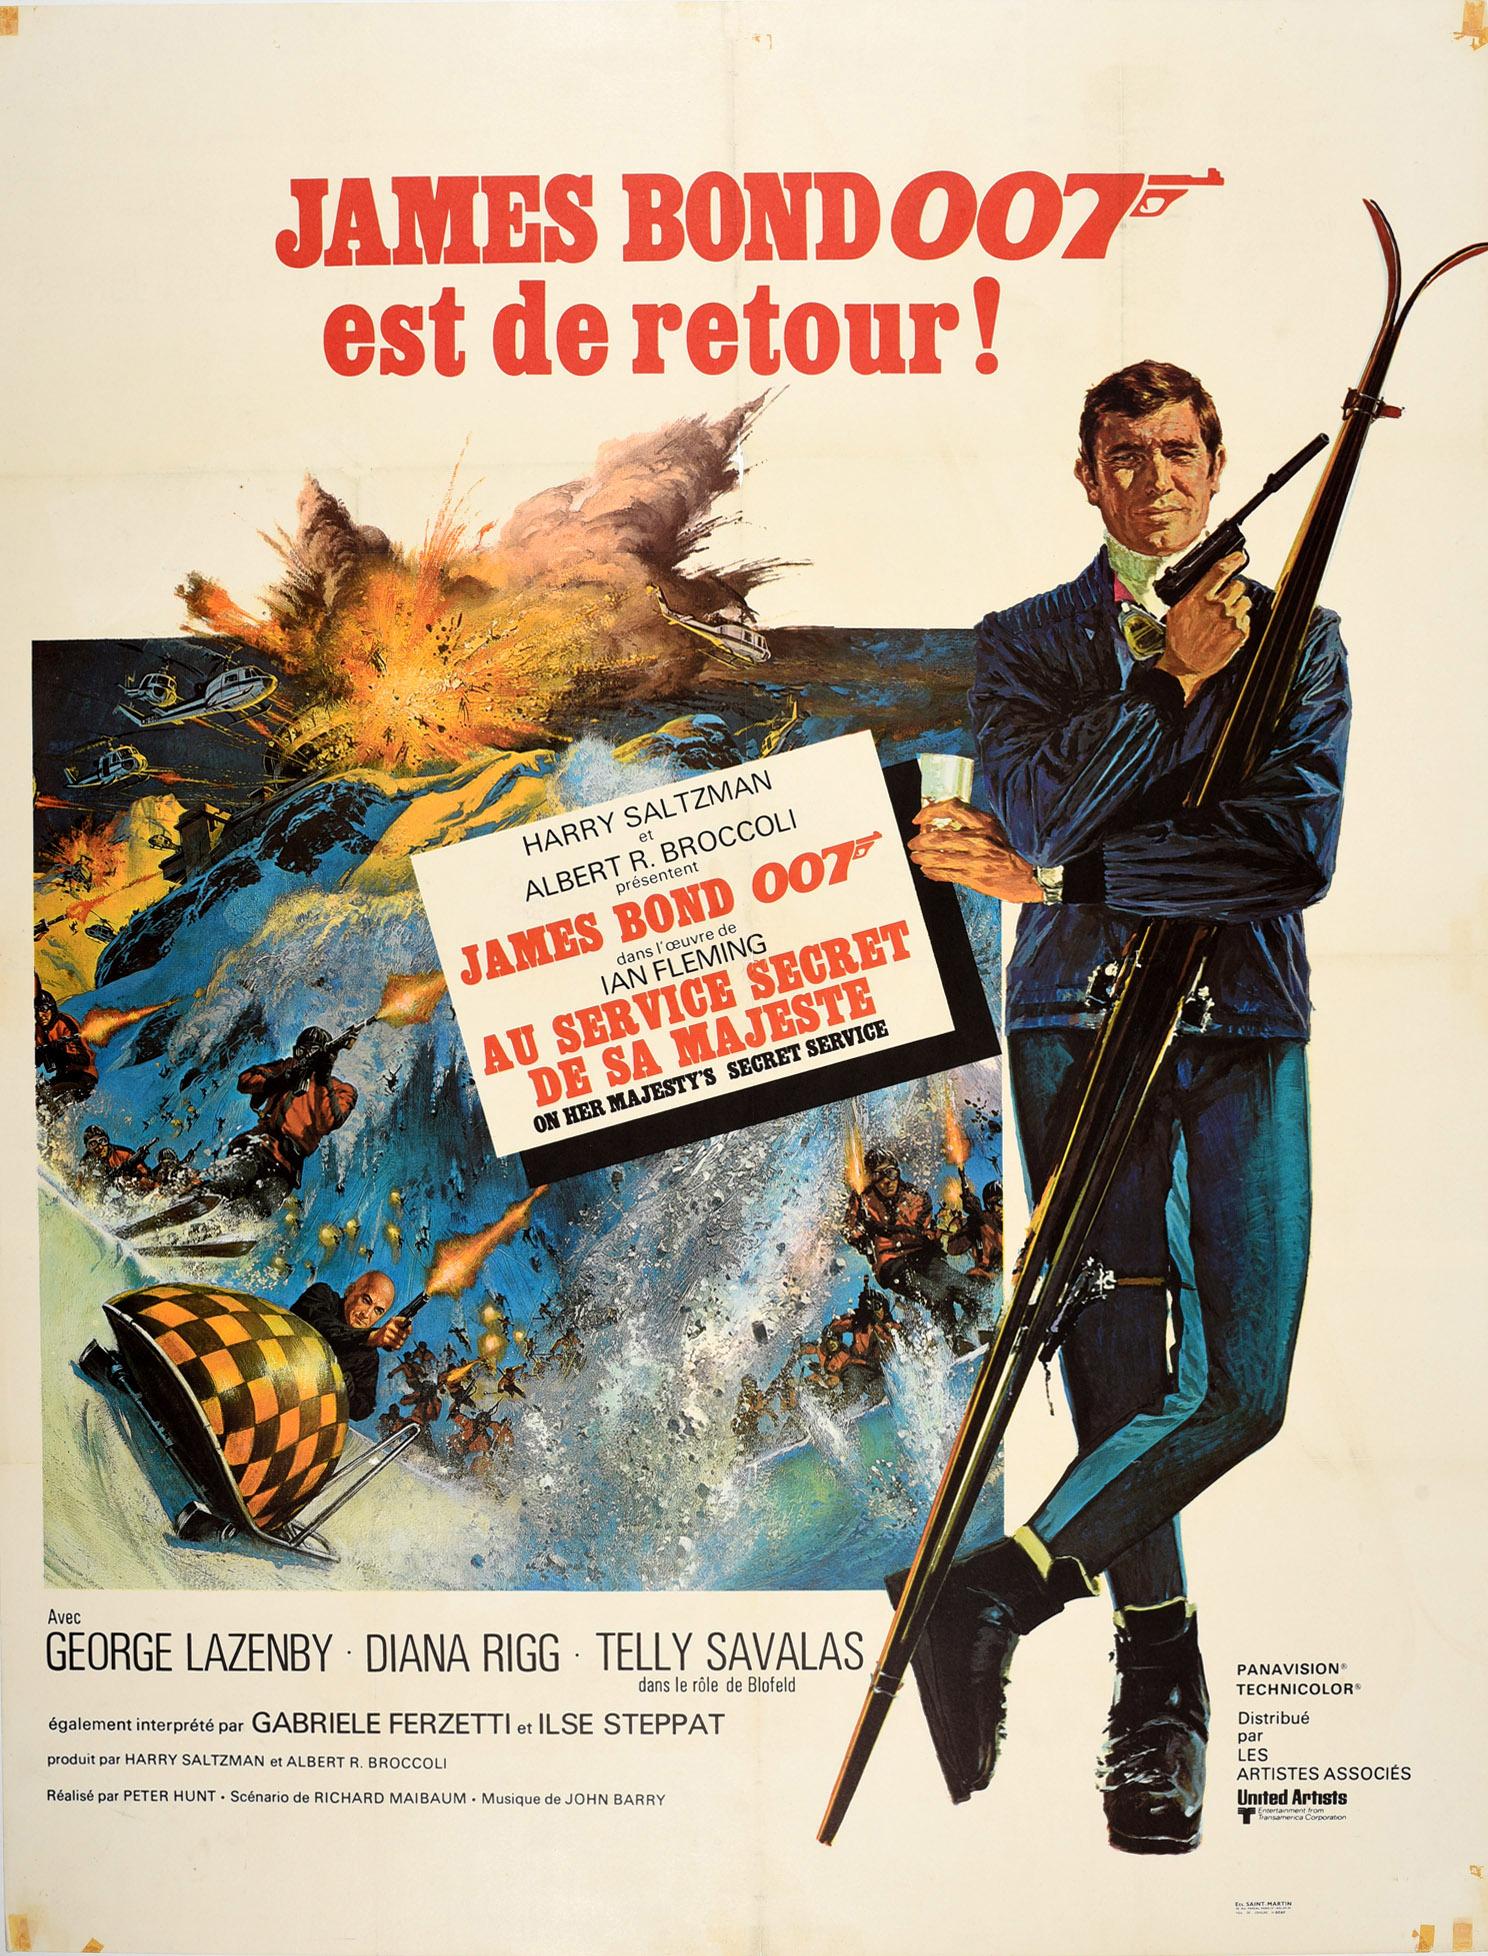 Yves Thos / Robert E. McGinnis Print - Original Vintage Film Poster James Bond On Her Majesty's Secret Service 007 Skis